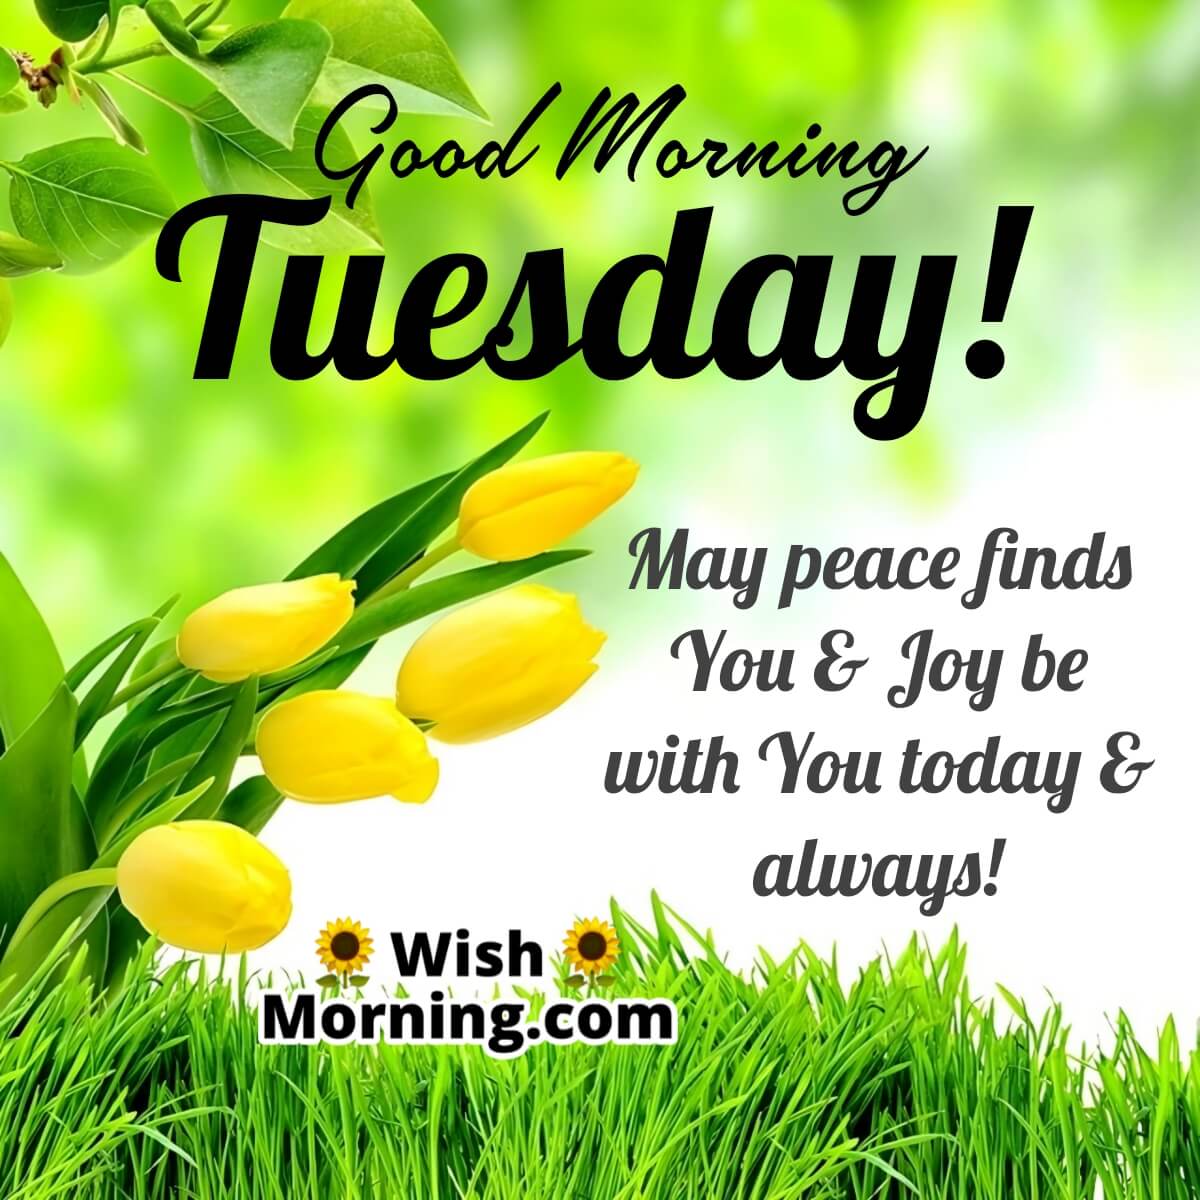 Good Morning Tuesday Wish